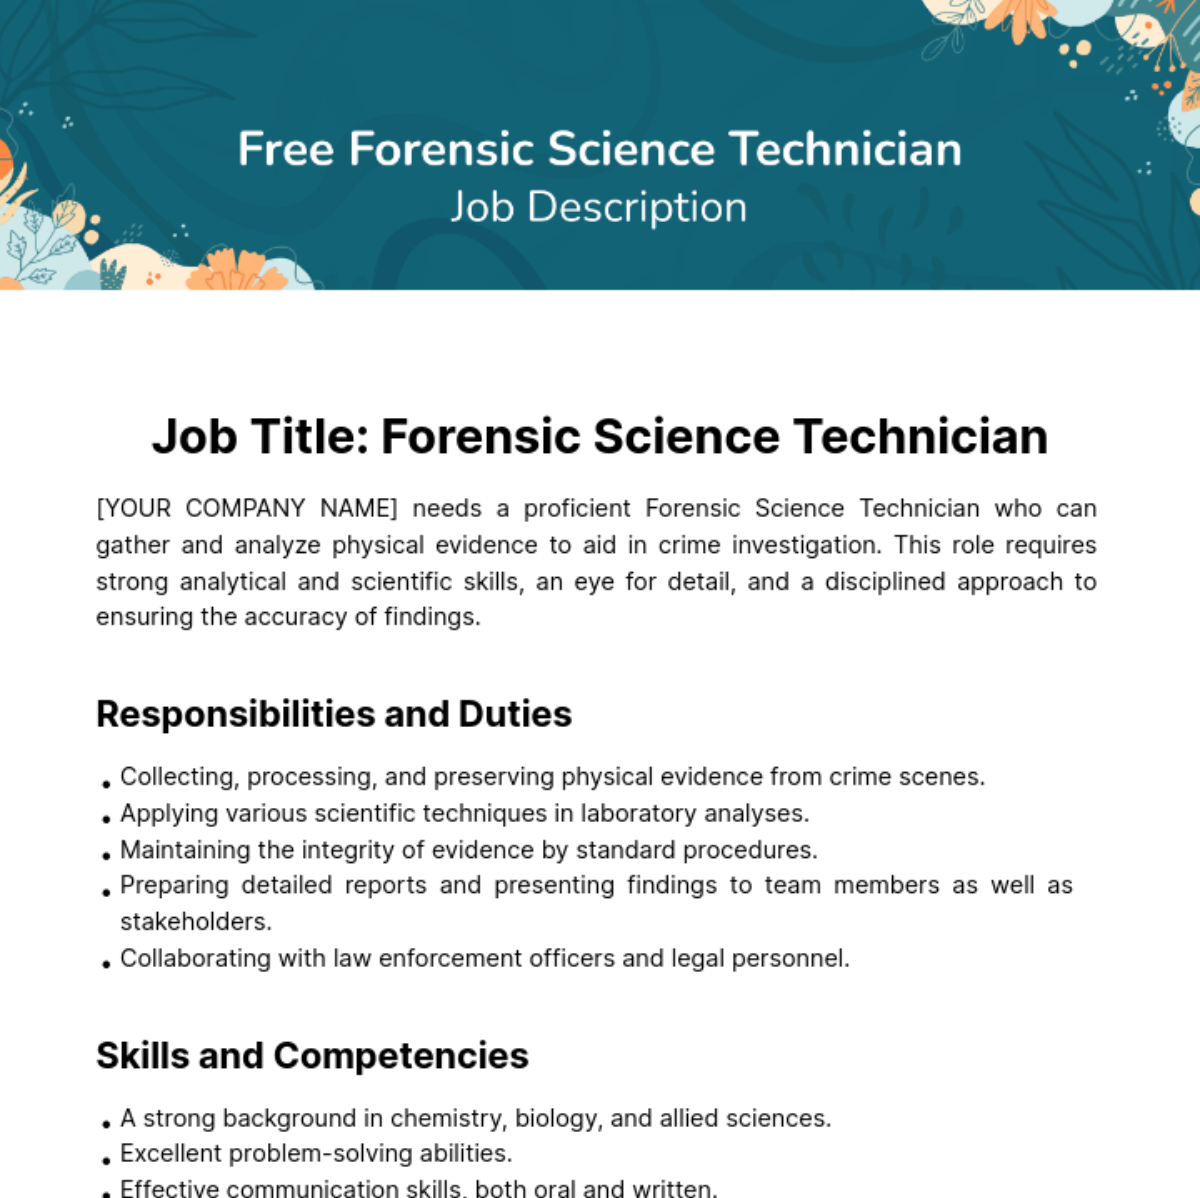 Forensic Science Technician Job Description Template Edit Online